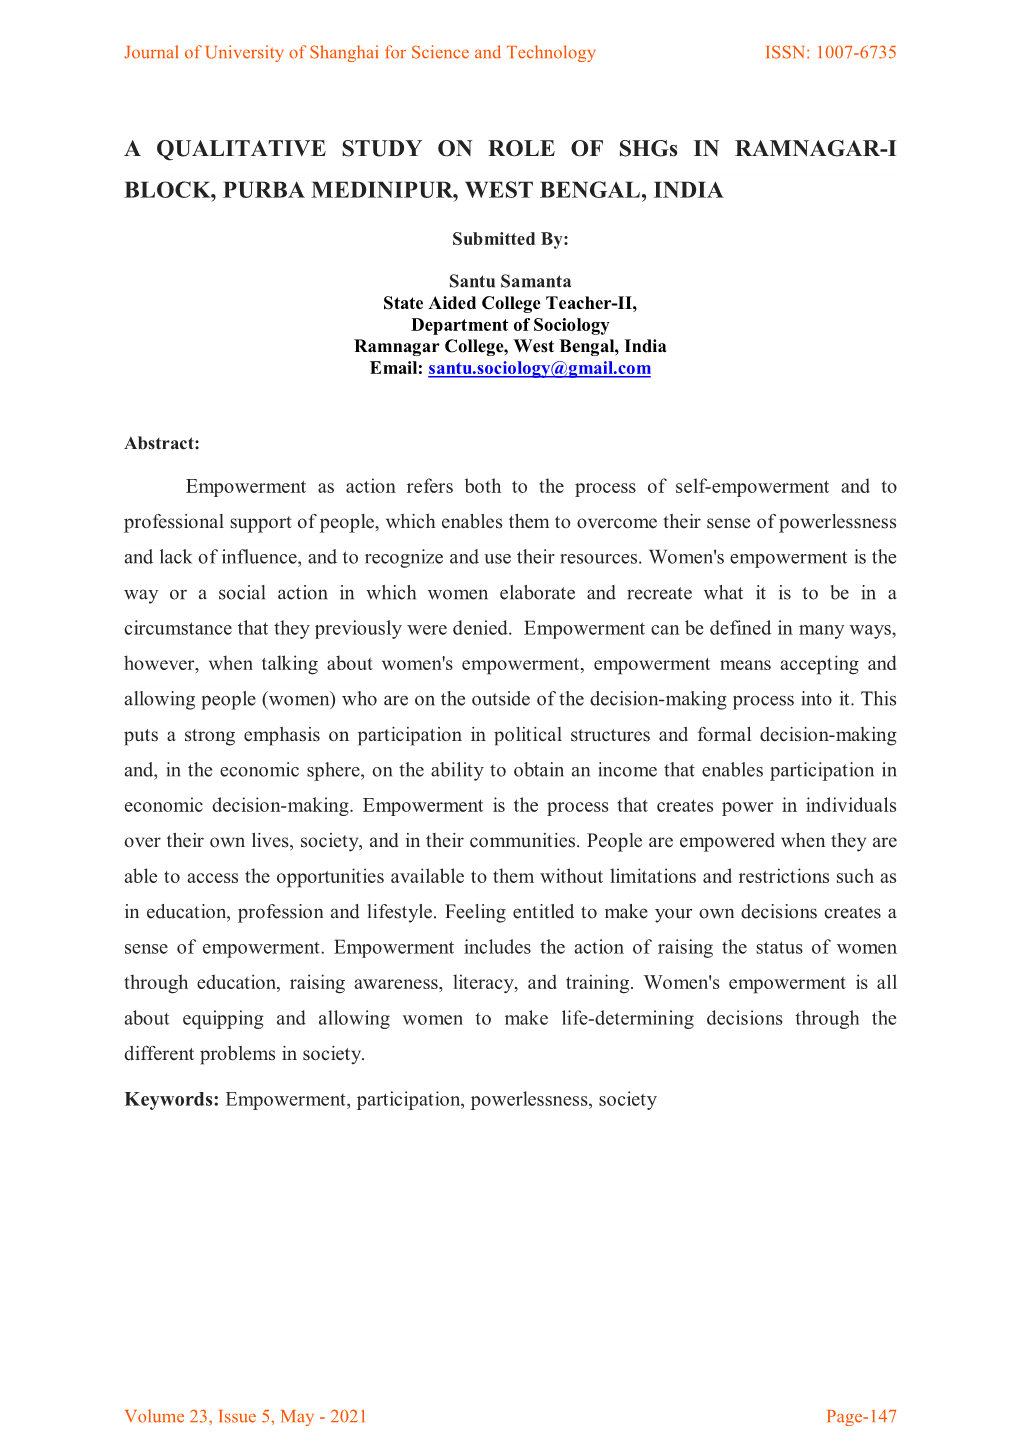 A QUALITATIVE STUDY on ROLE of Shgs in RAMNAGAR-I BLOCK, PURBA MEDINIPUR, WEST BENGAL, INDIA